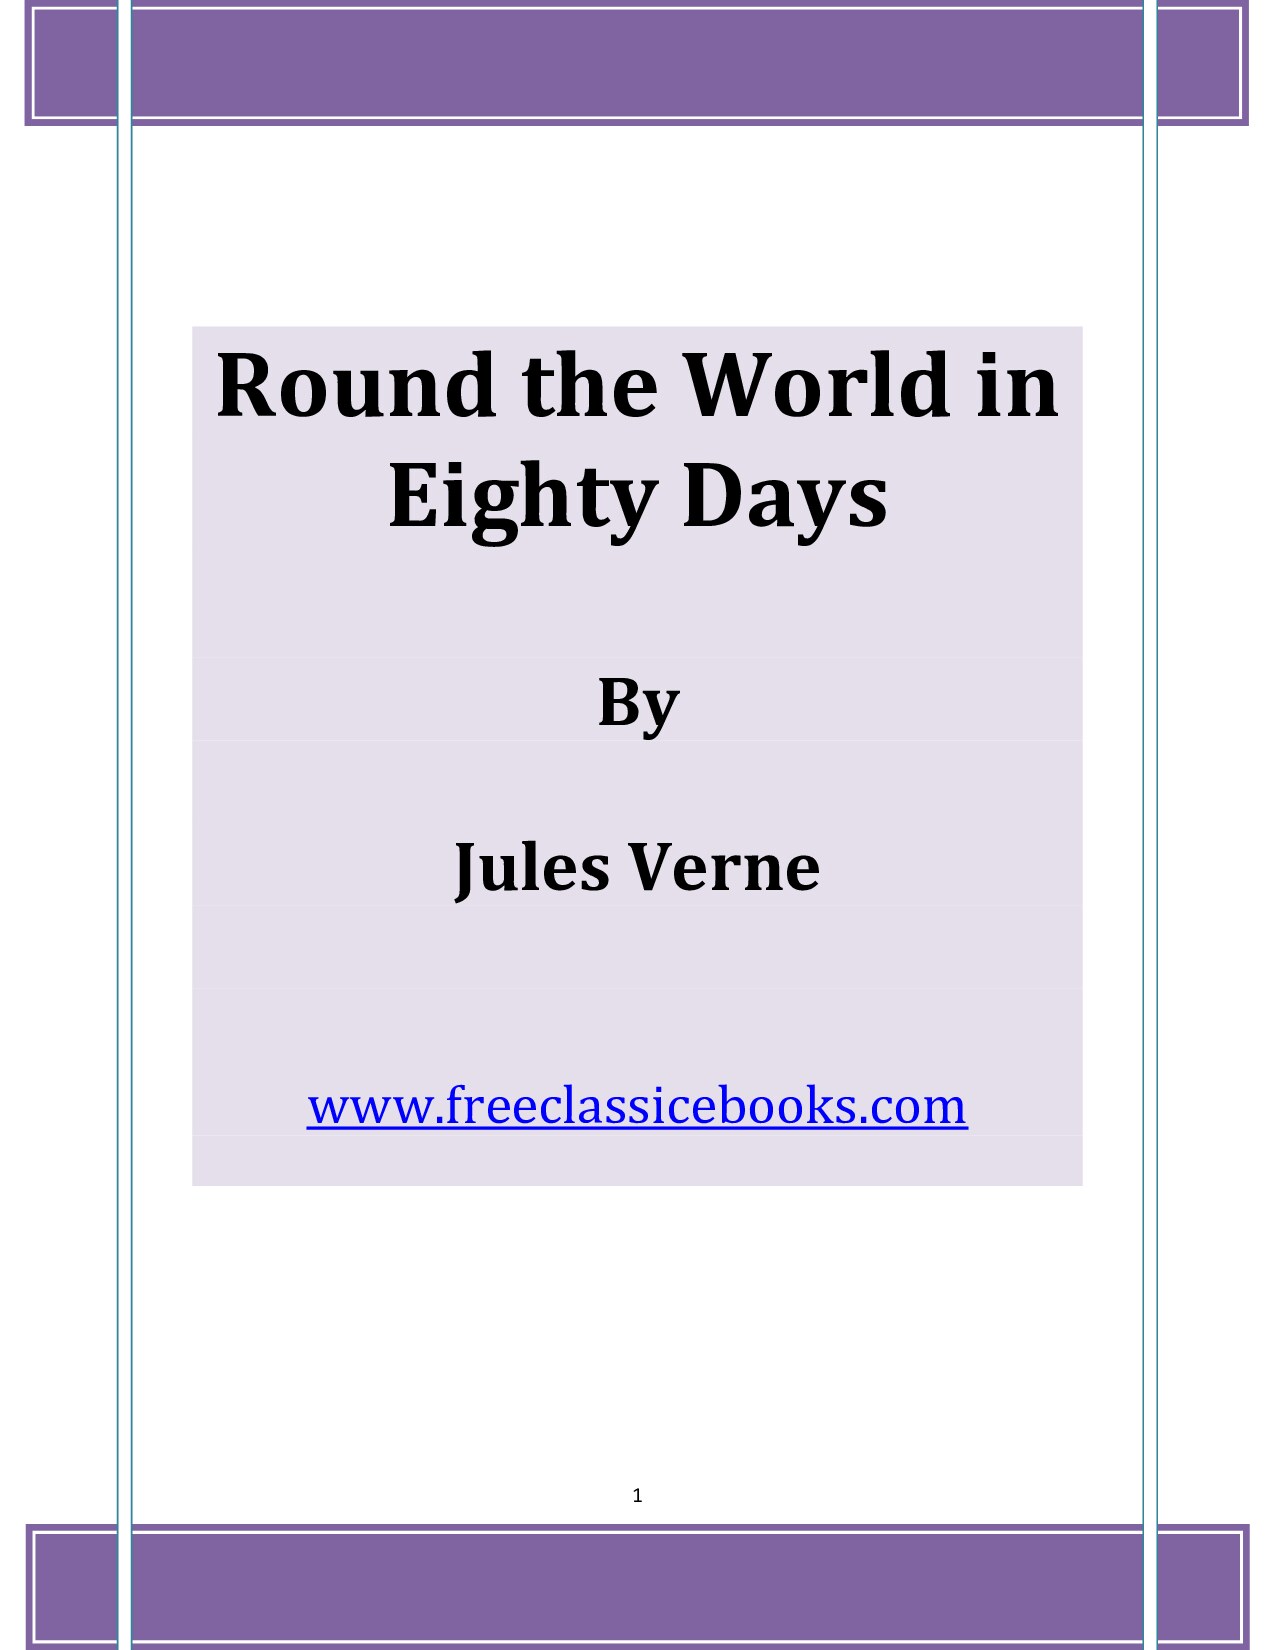 Microsoft Word - Round the World in Eighty Days.doc